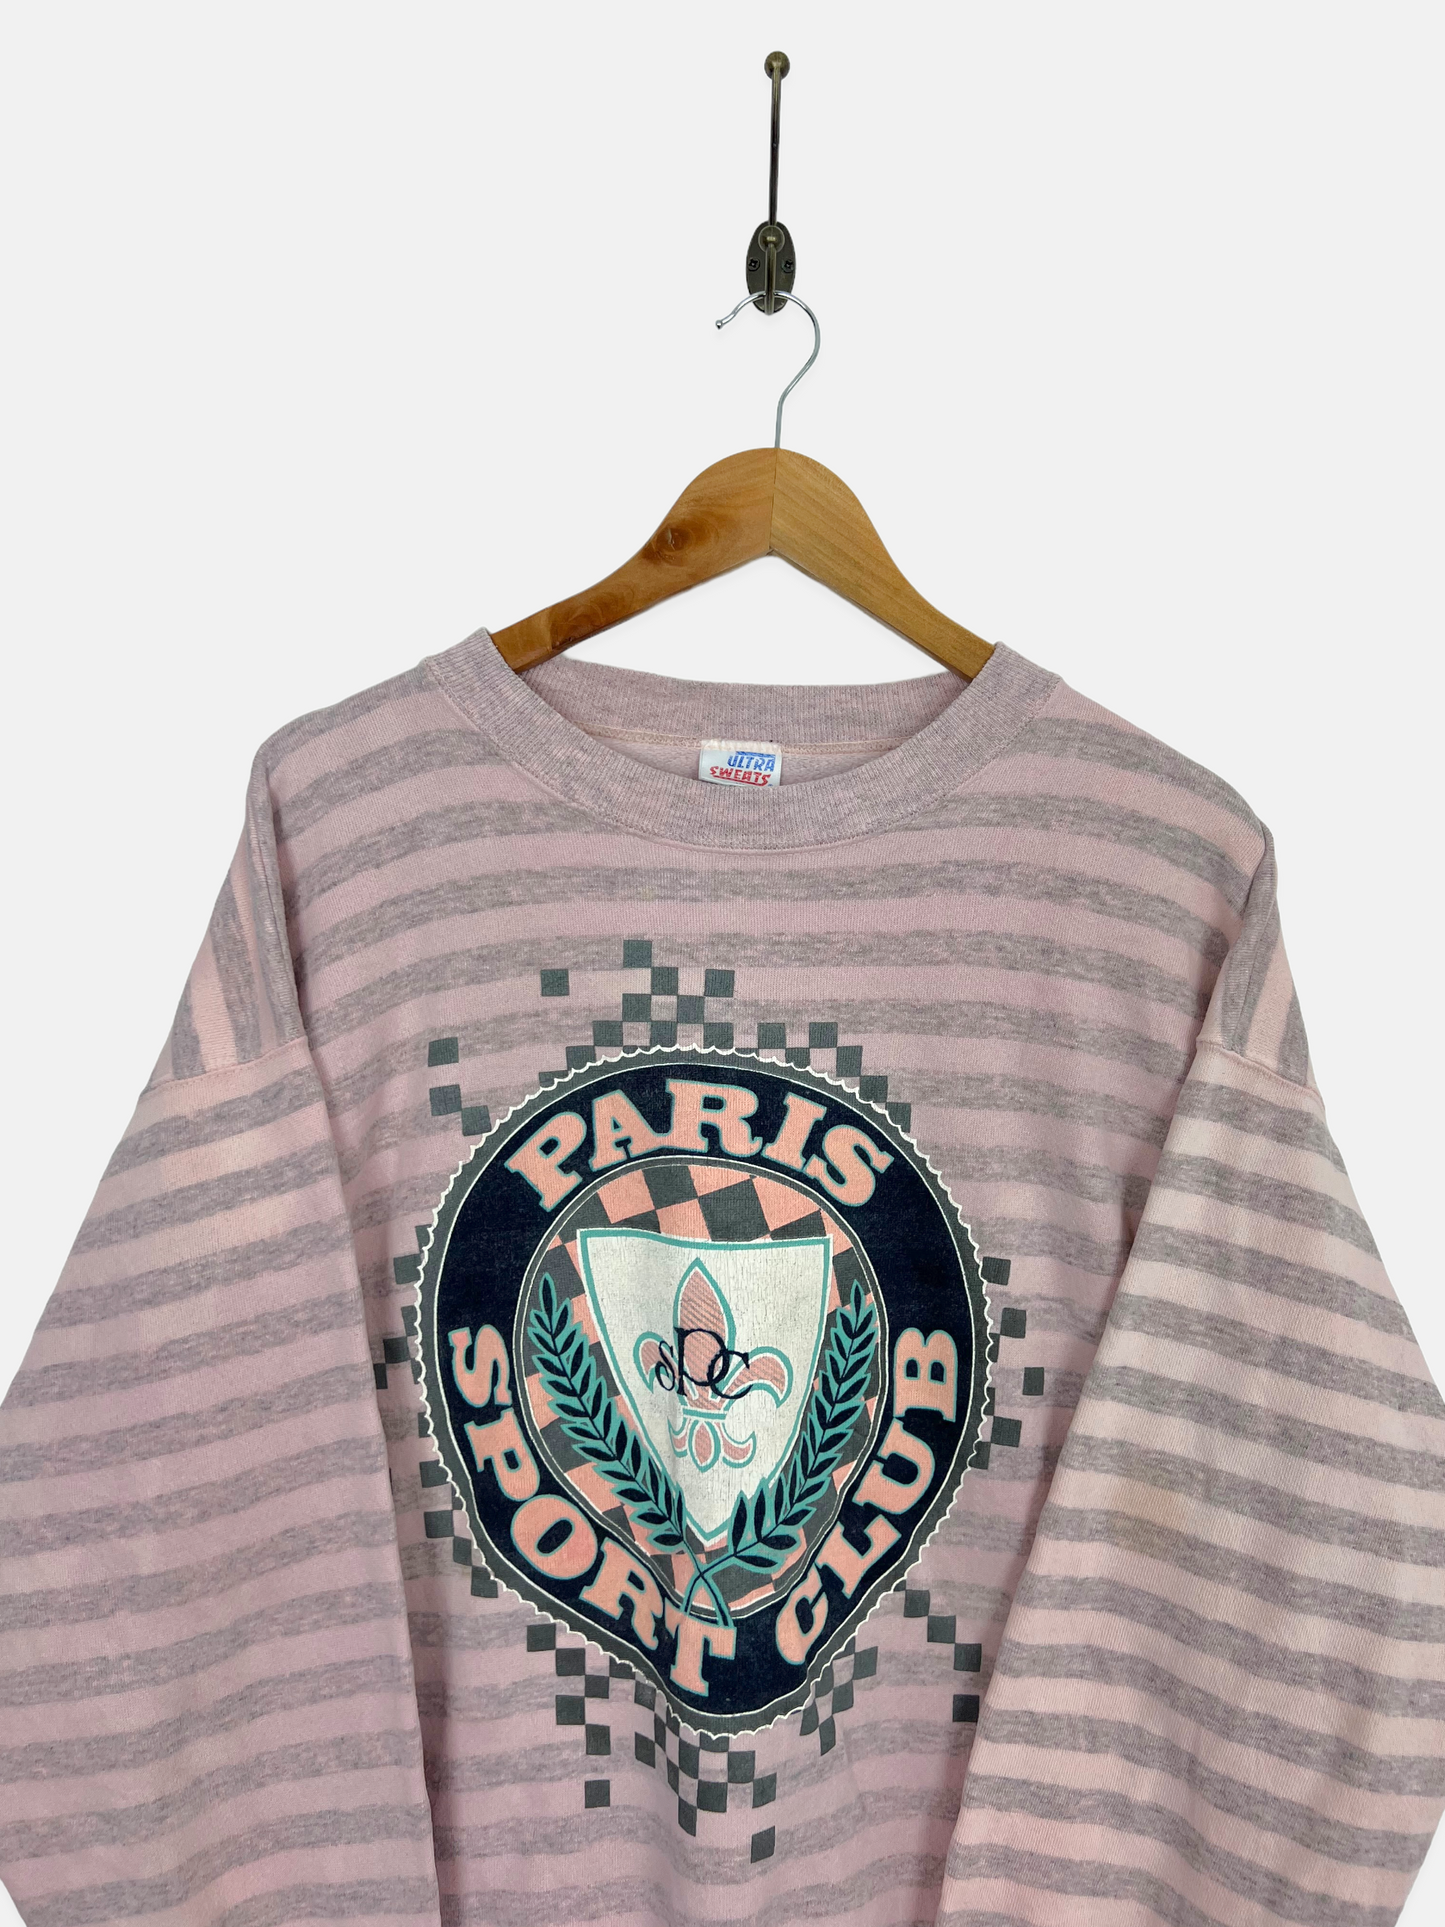 90's Paris Sport Club USA Made Vintage Sweatshirt Size M